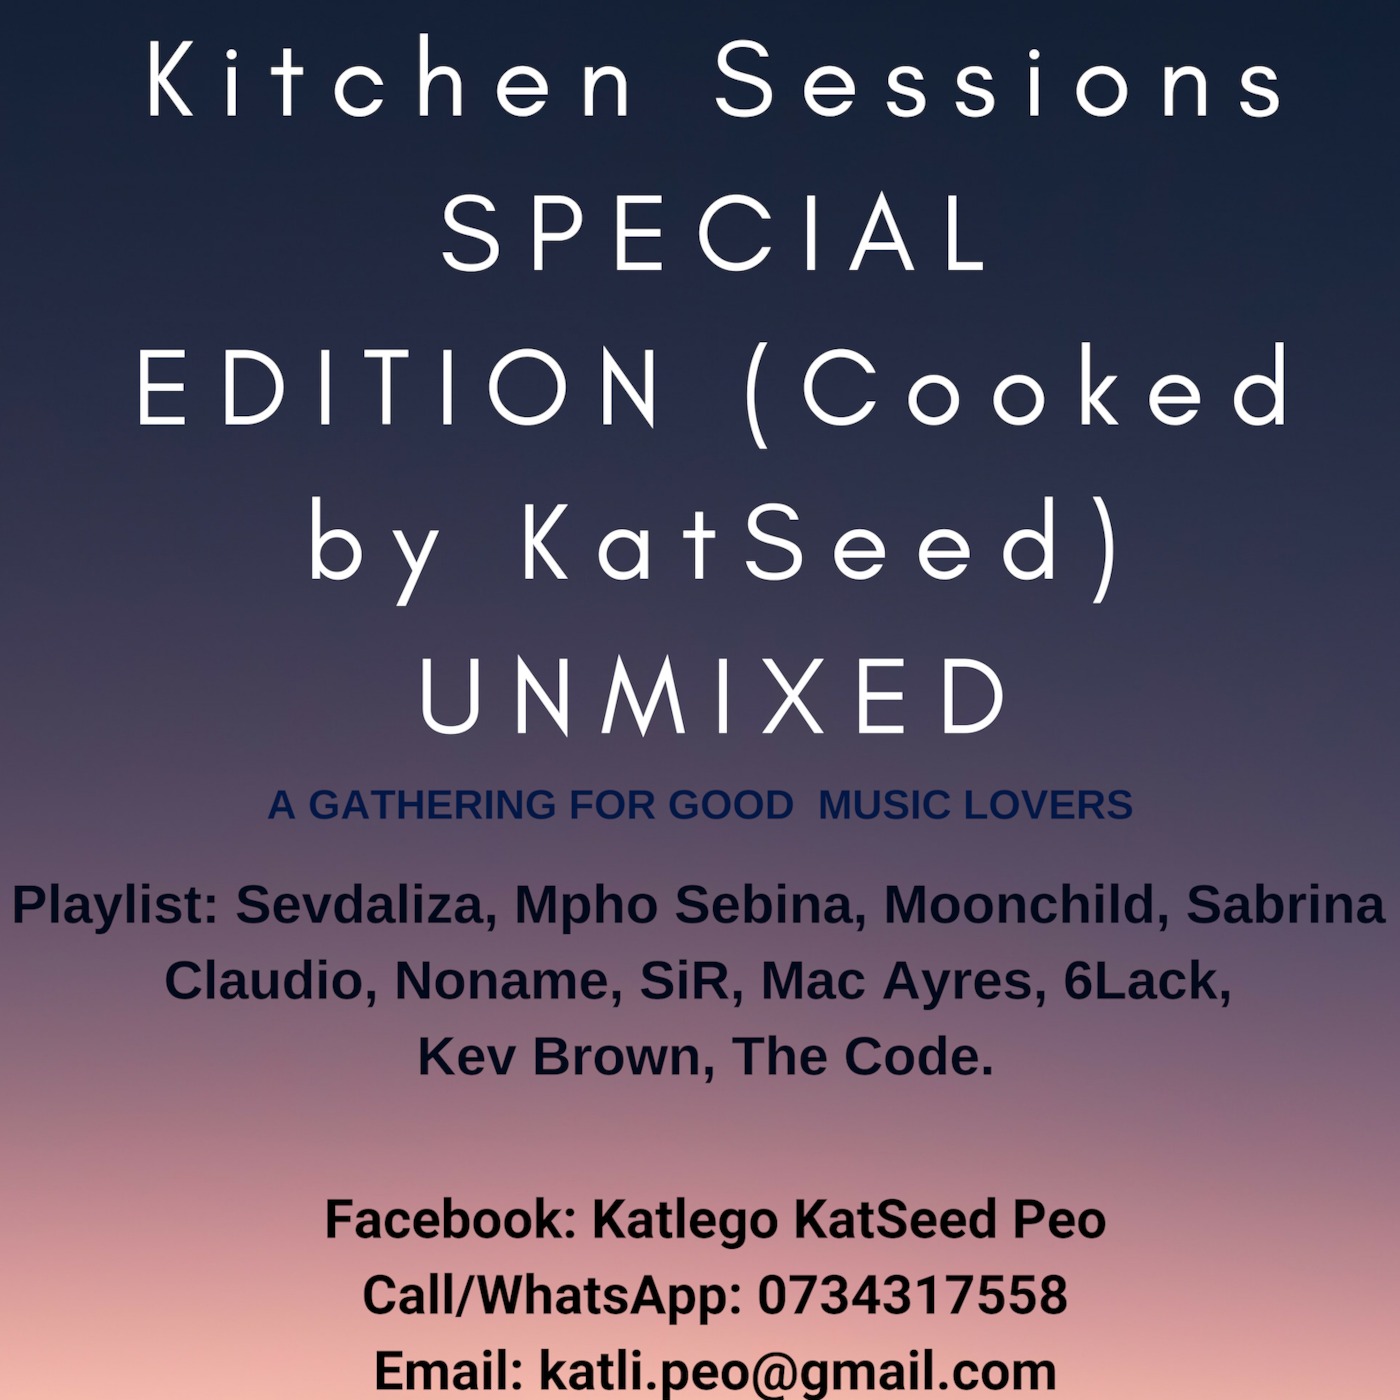 KatSeed's Kitchen Sessions